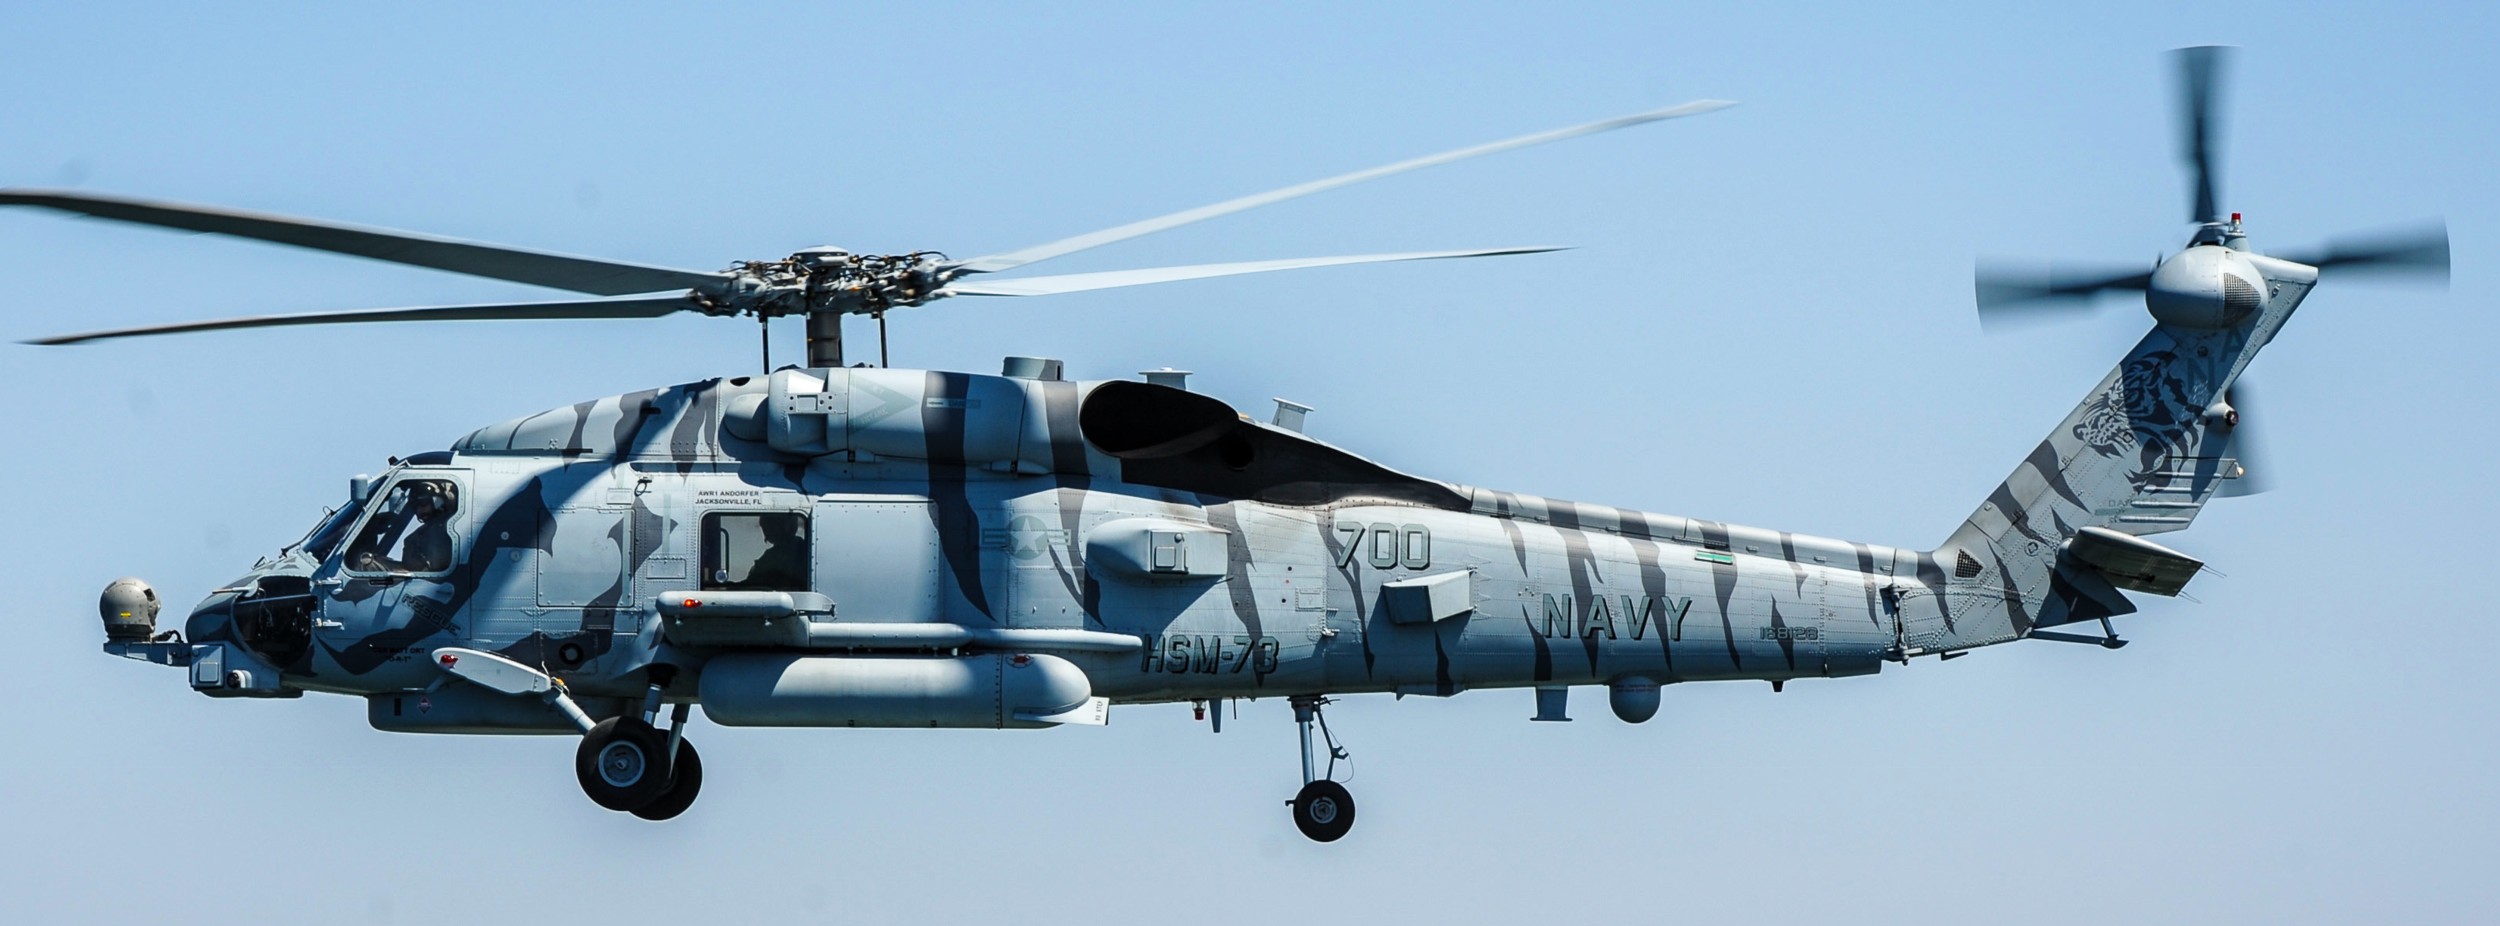 hsm-73 battlecats helicopter maritime strike squadron us navy mh-60r seahawk 2016 41 san diego fleet week